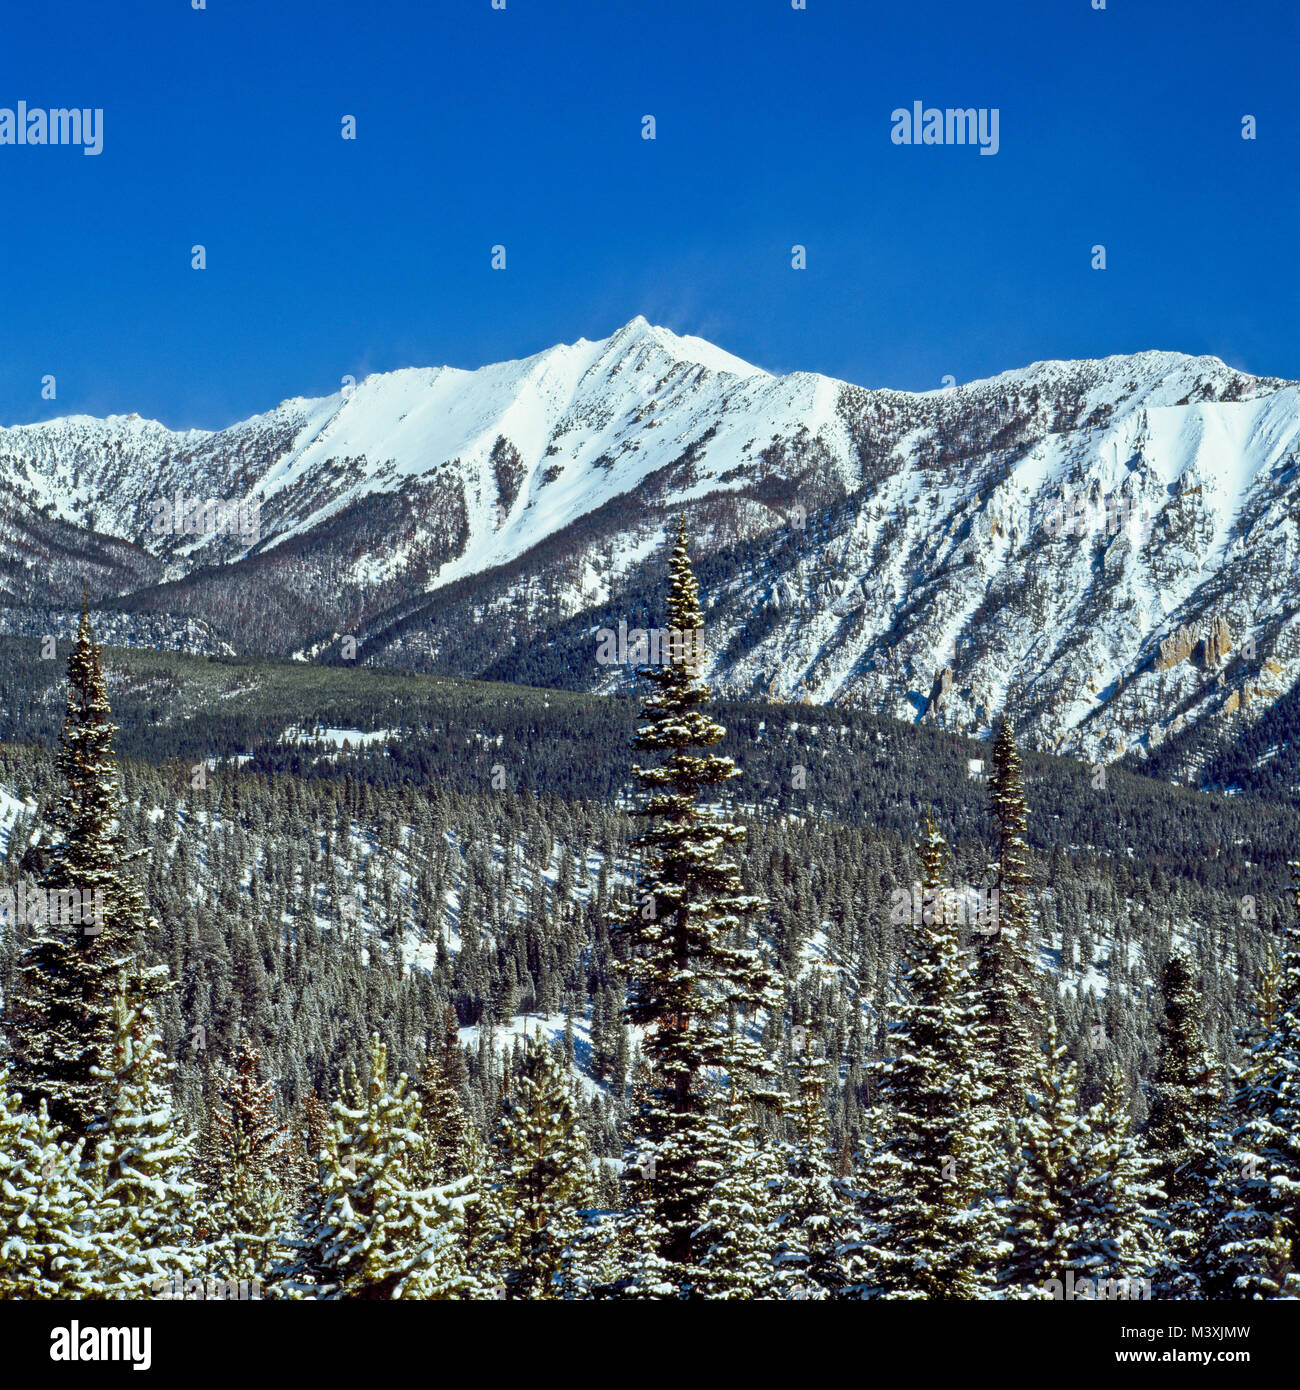 wilson peak in the spanish peaks section of the madison range in winter above big sky, montana Stock Photo